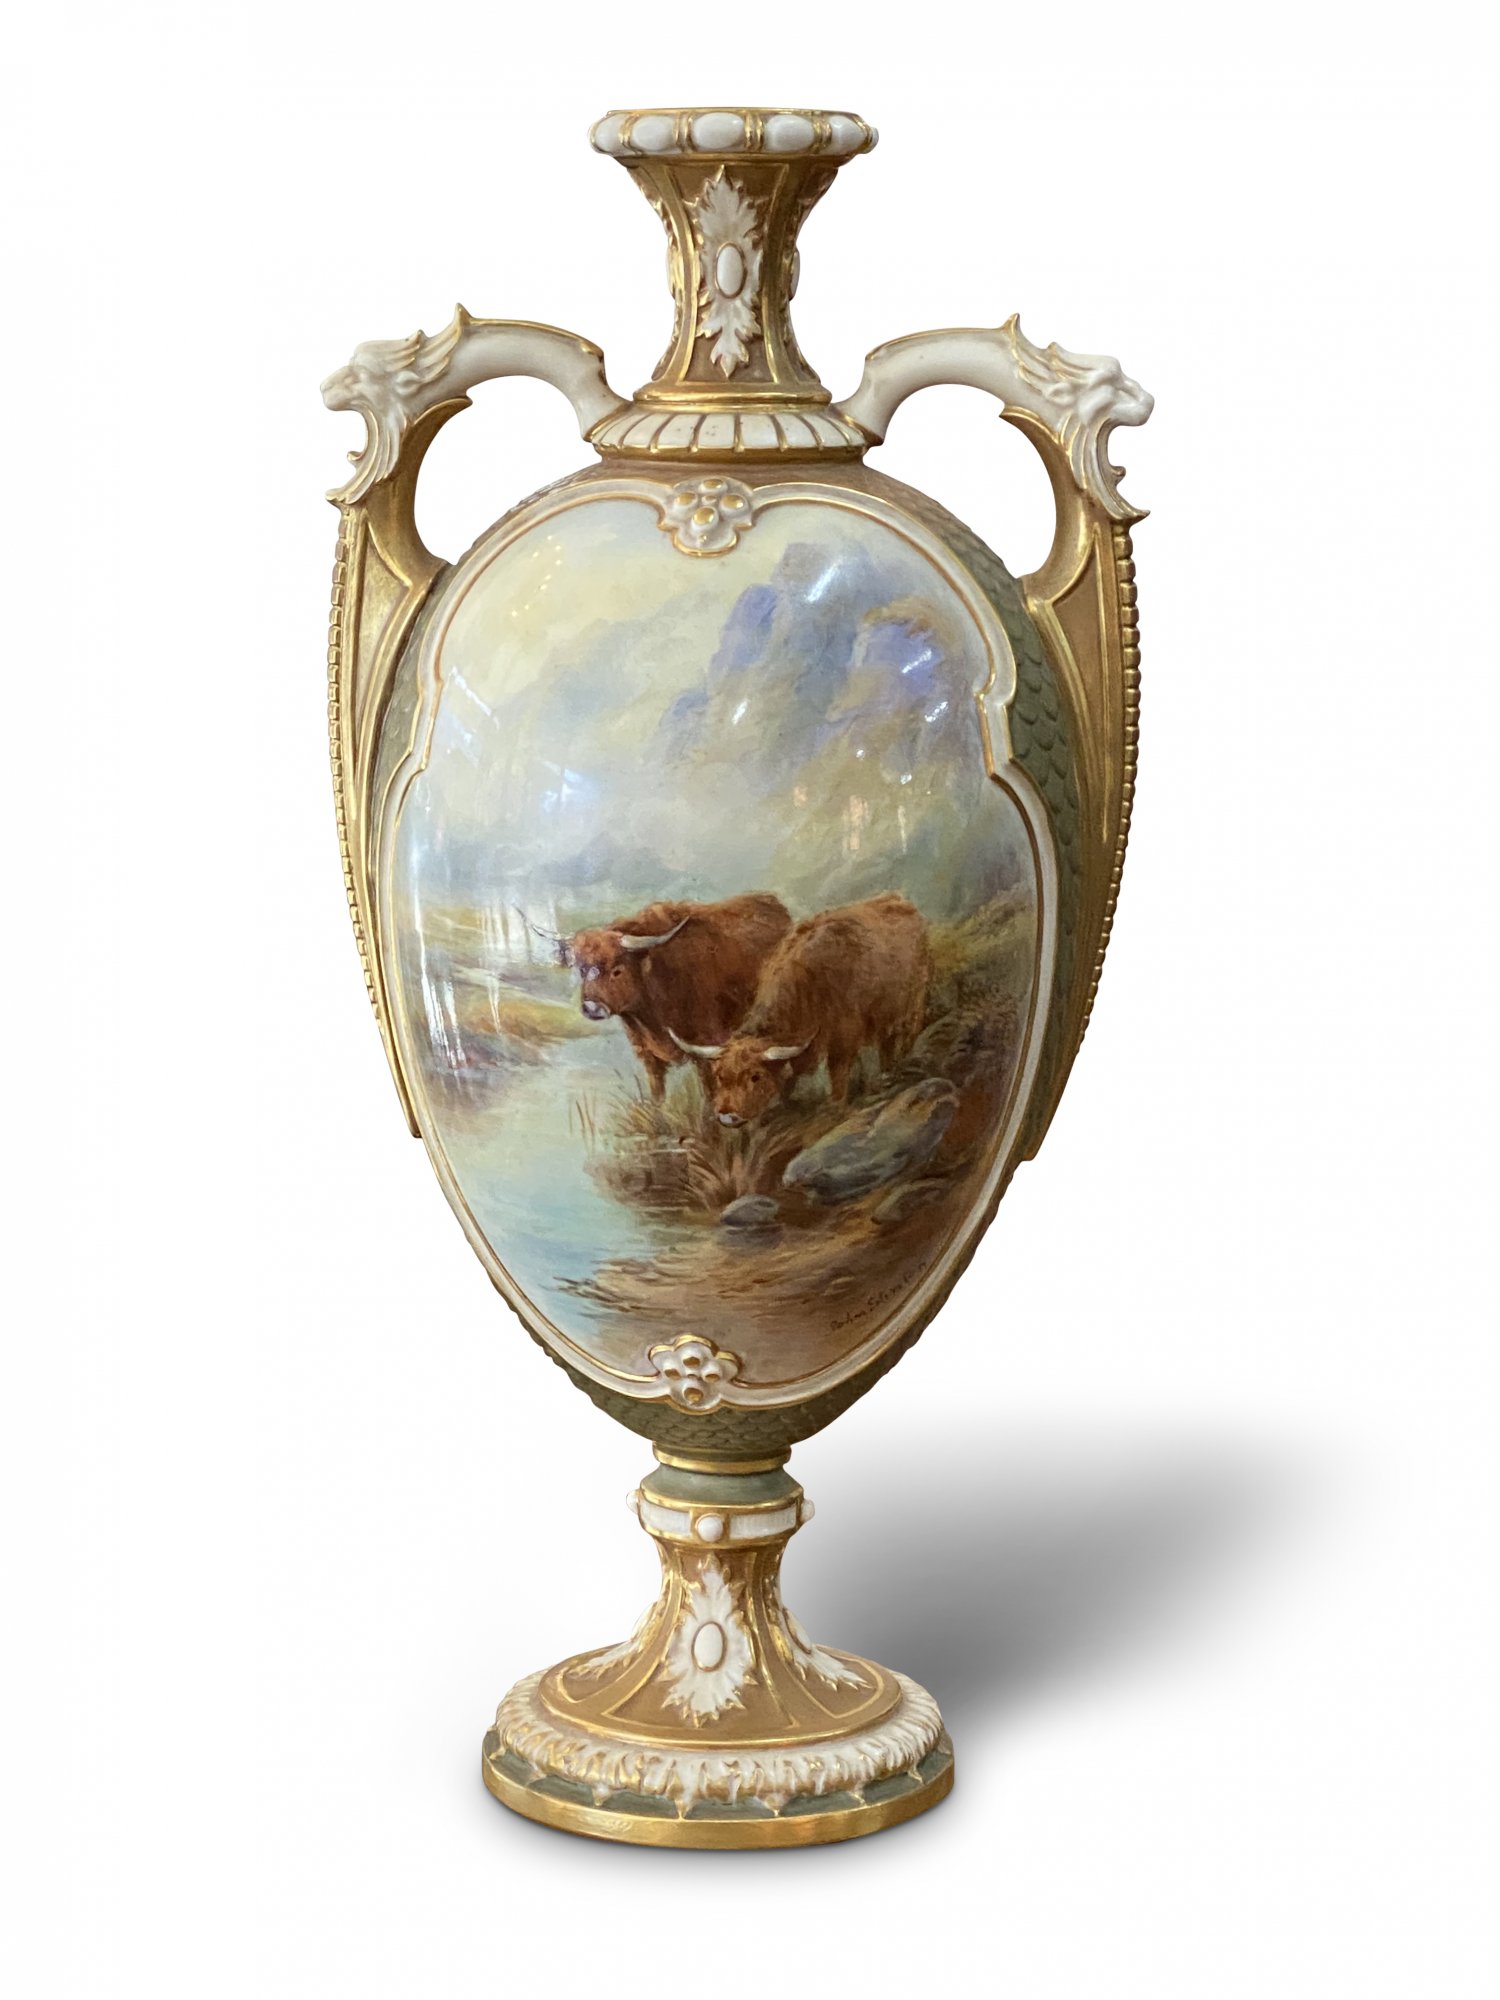 Royal Worcester double-handled vase, handpainted with Scottish highland cattle, signed John Stinton